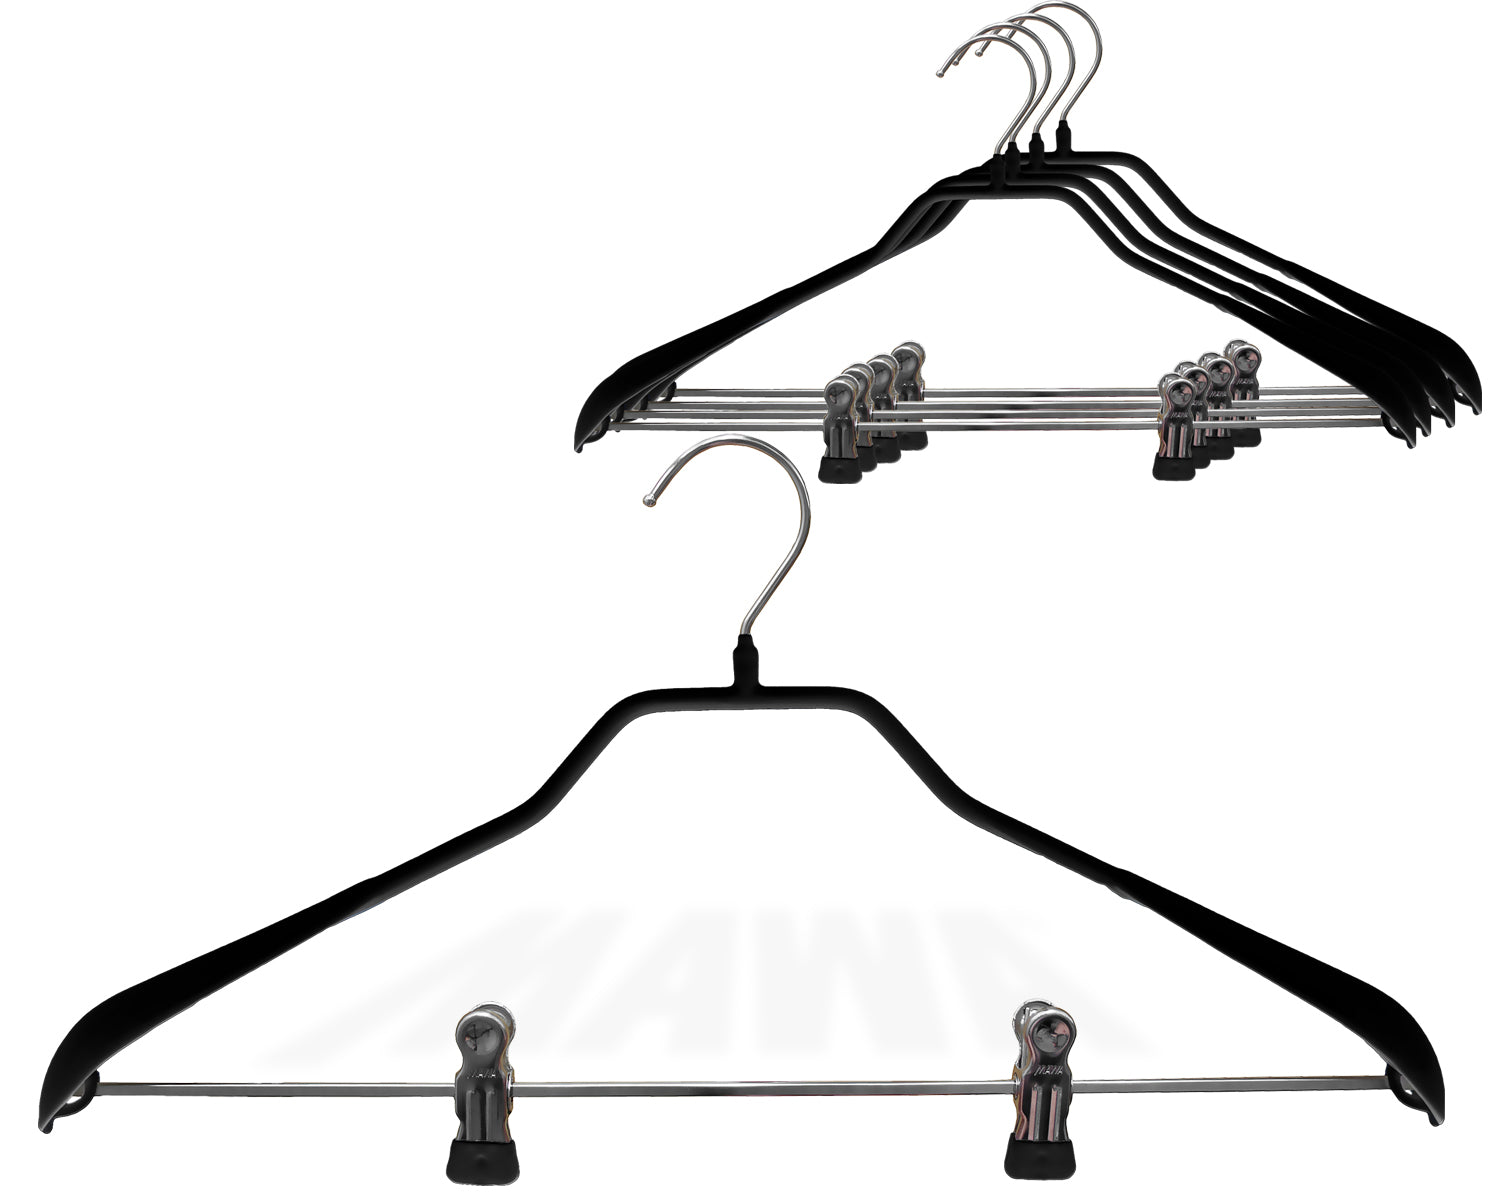 Ventilator Hanger - Wide shoulder- Shape Preserving- Heavy-Duty